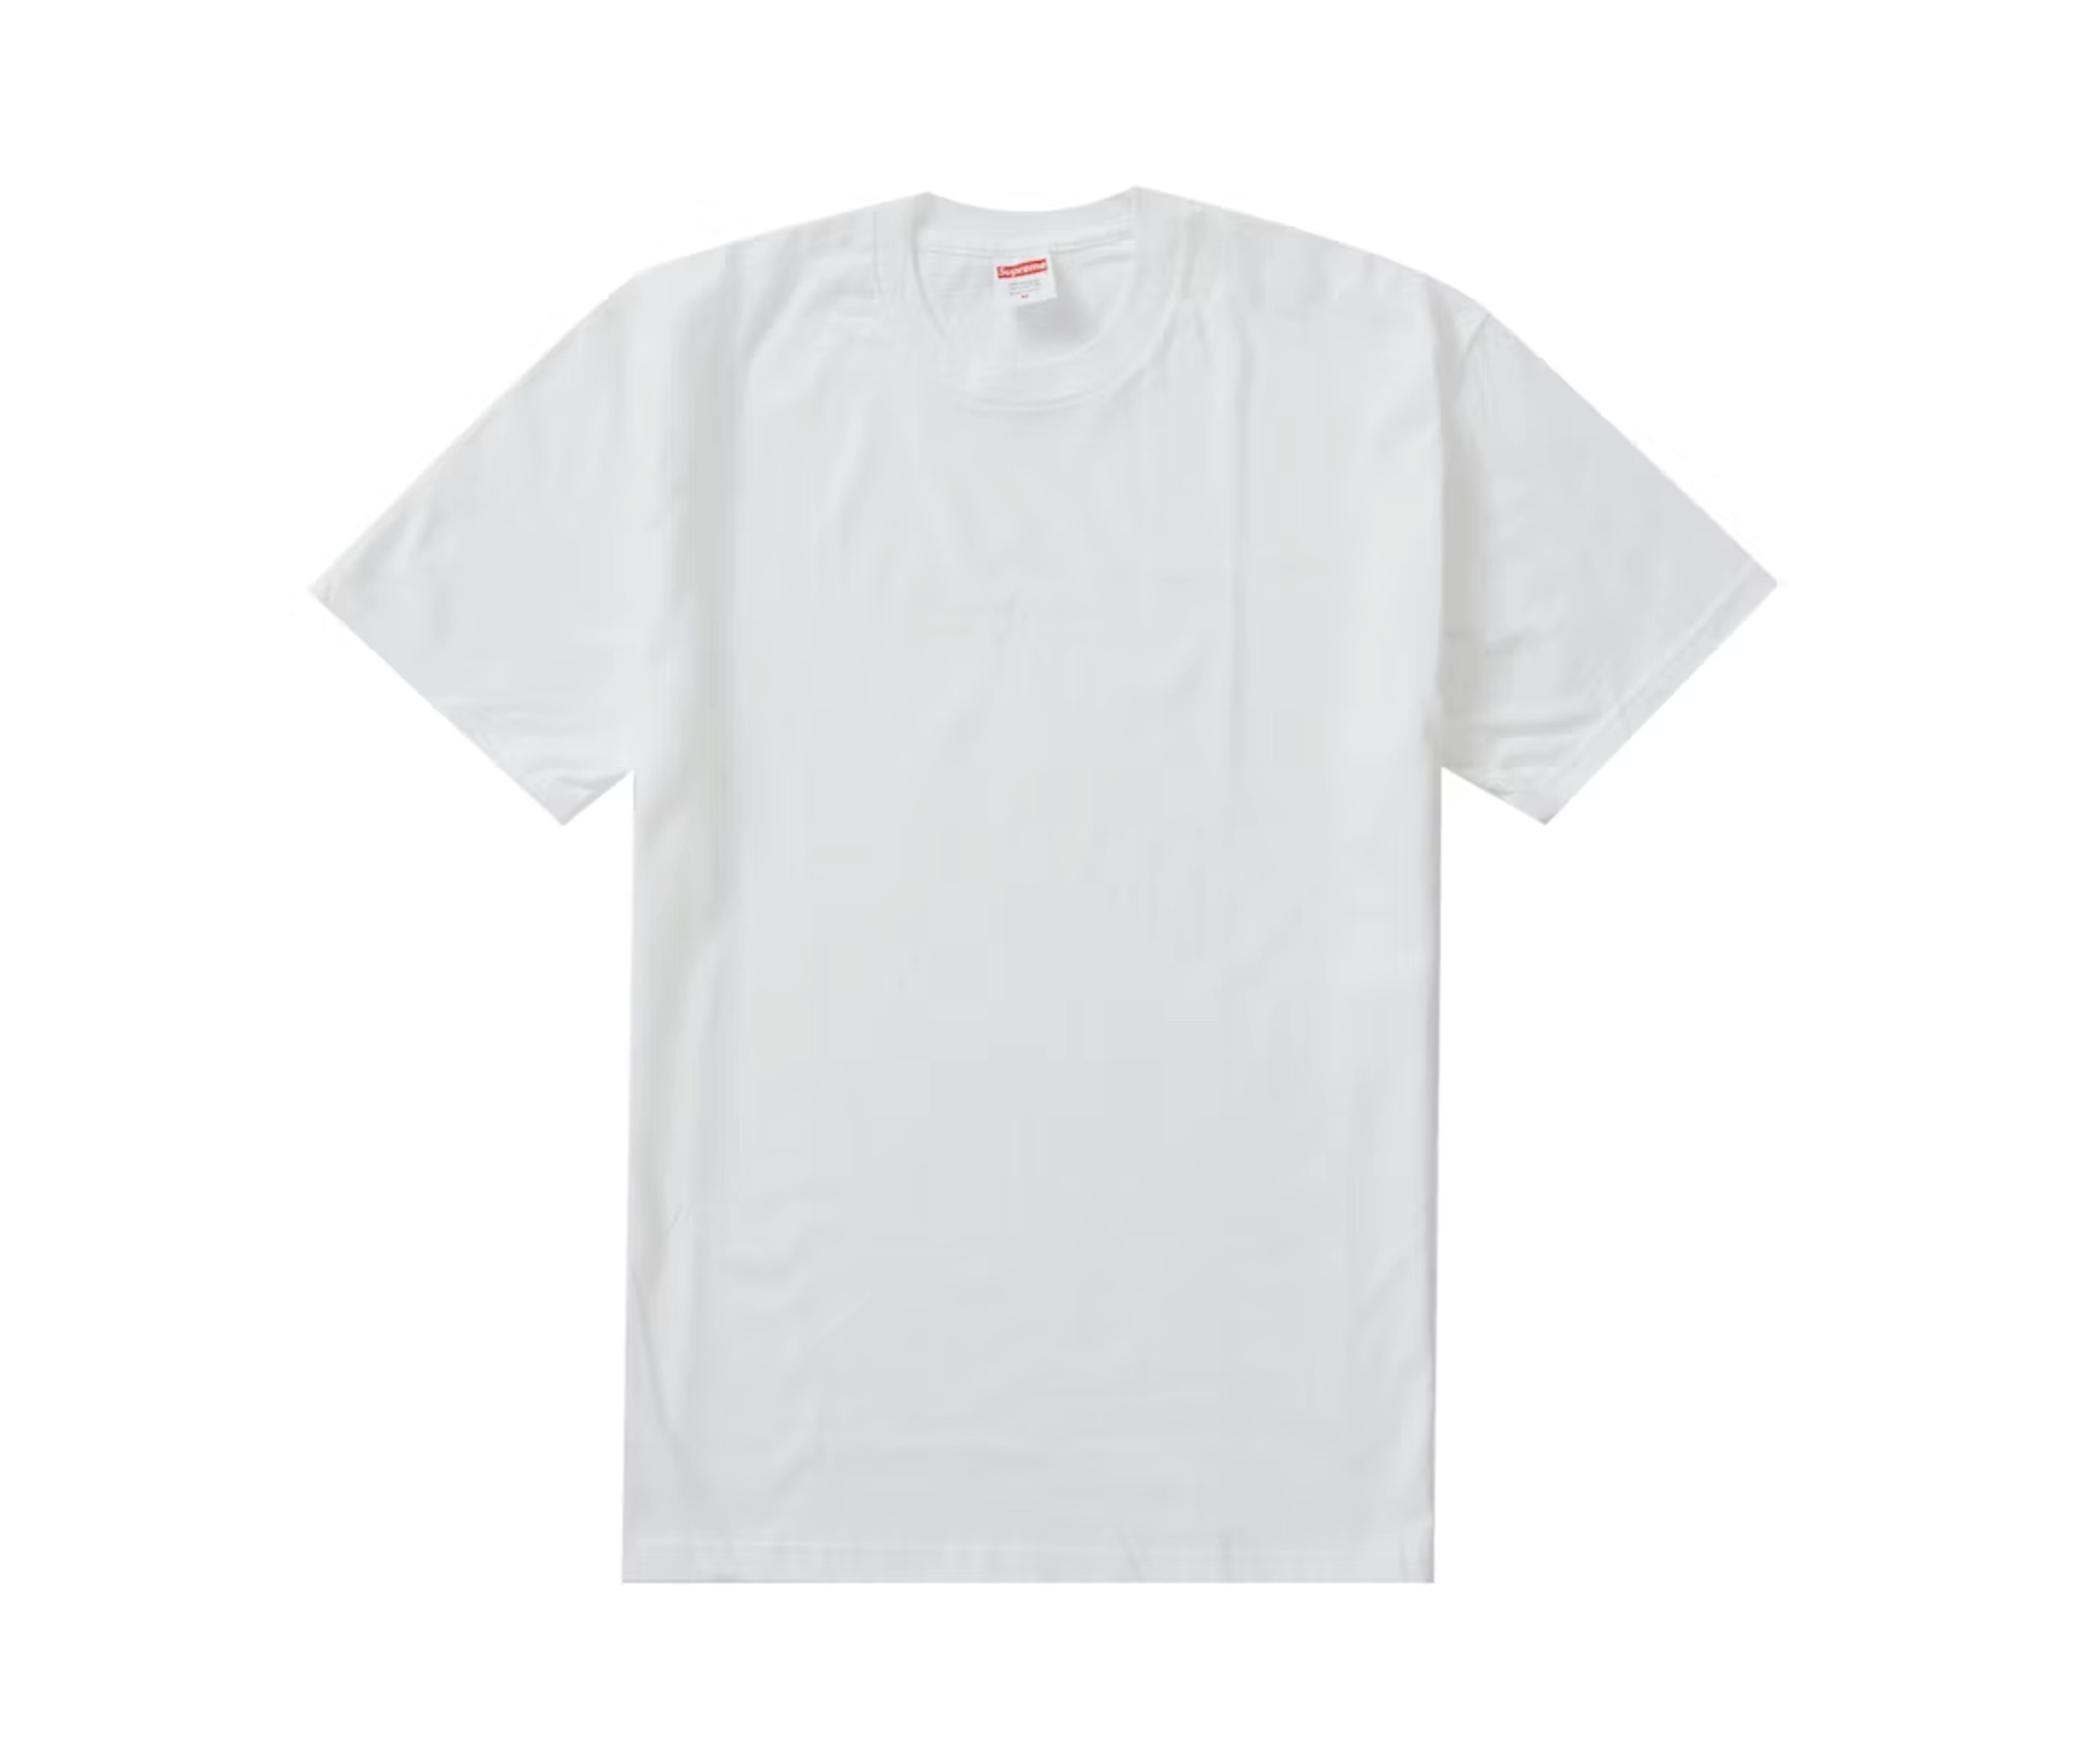 Supreme Tonal Box Logo Short Sleeve Tee Shirt White